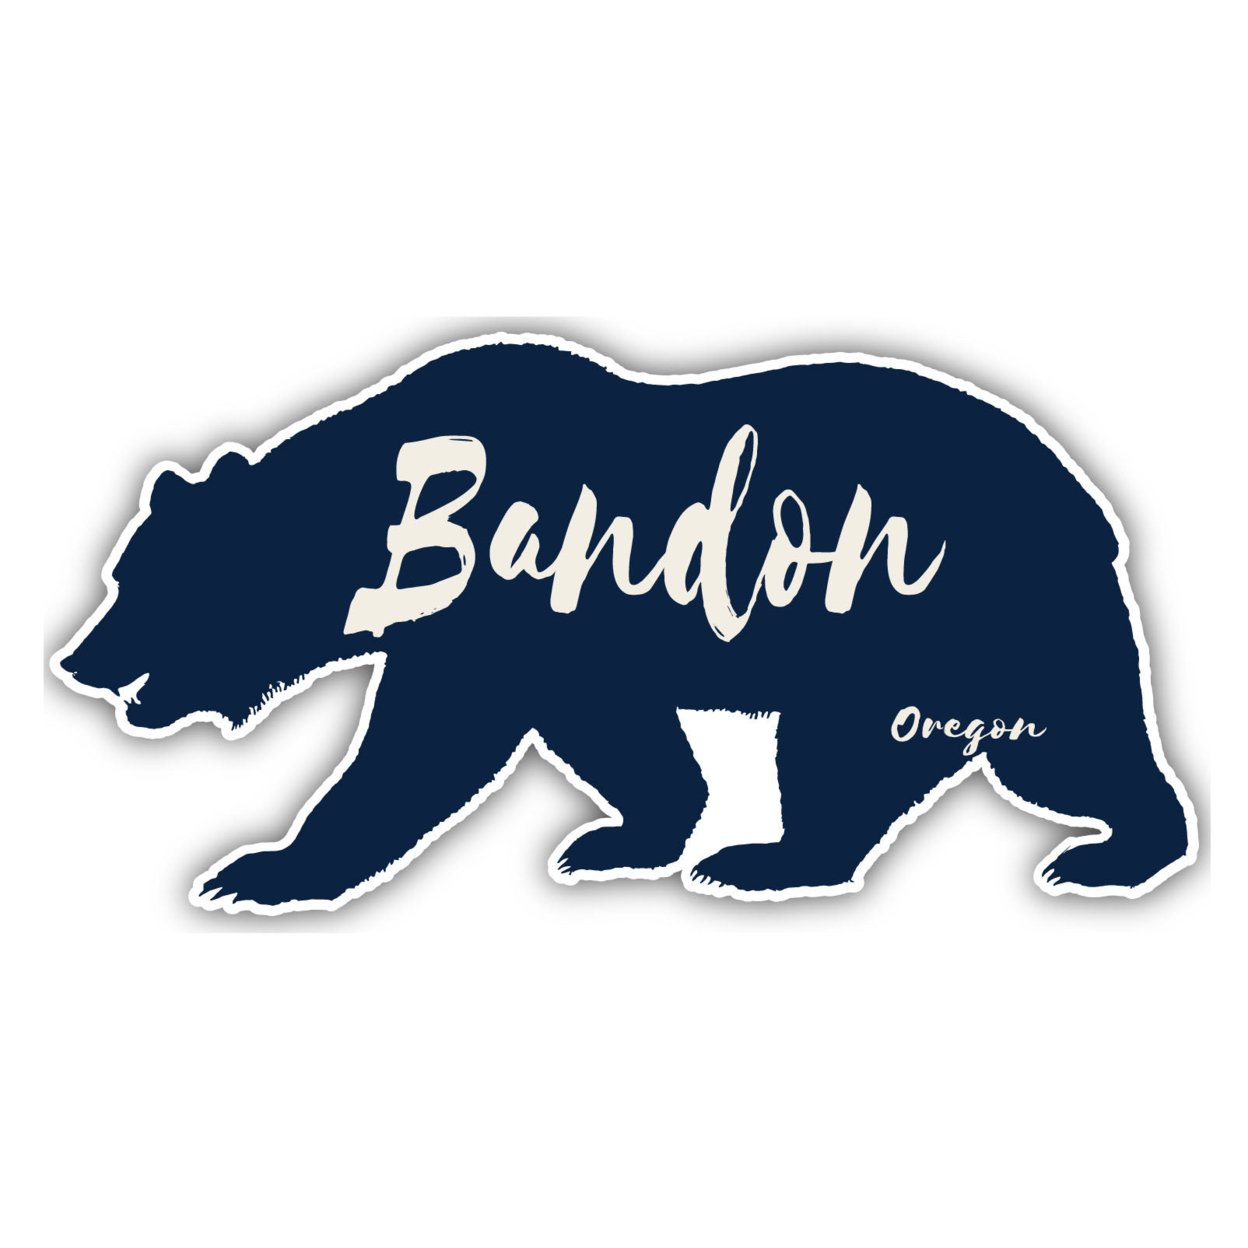 Bandon Oregon Souvenir Decorative Stickers (Choose Theme And Size) - 4-Pack, 8-Inch, Camp Life